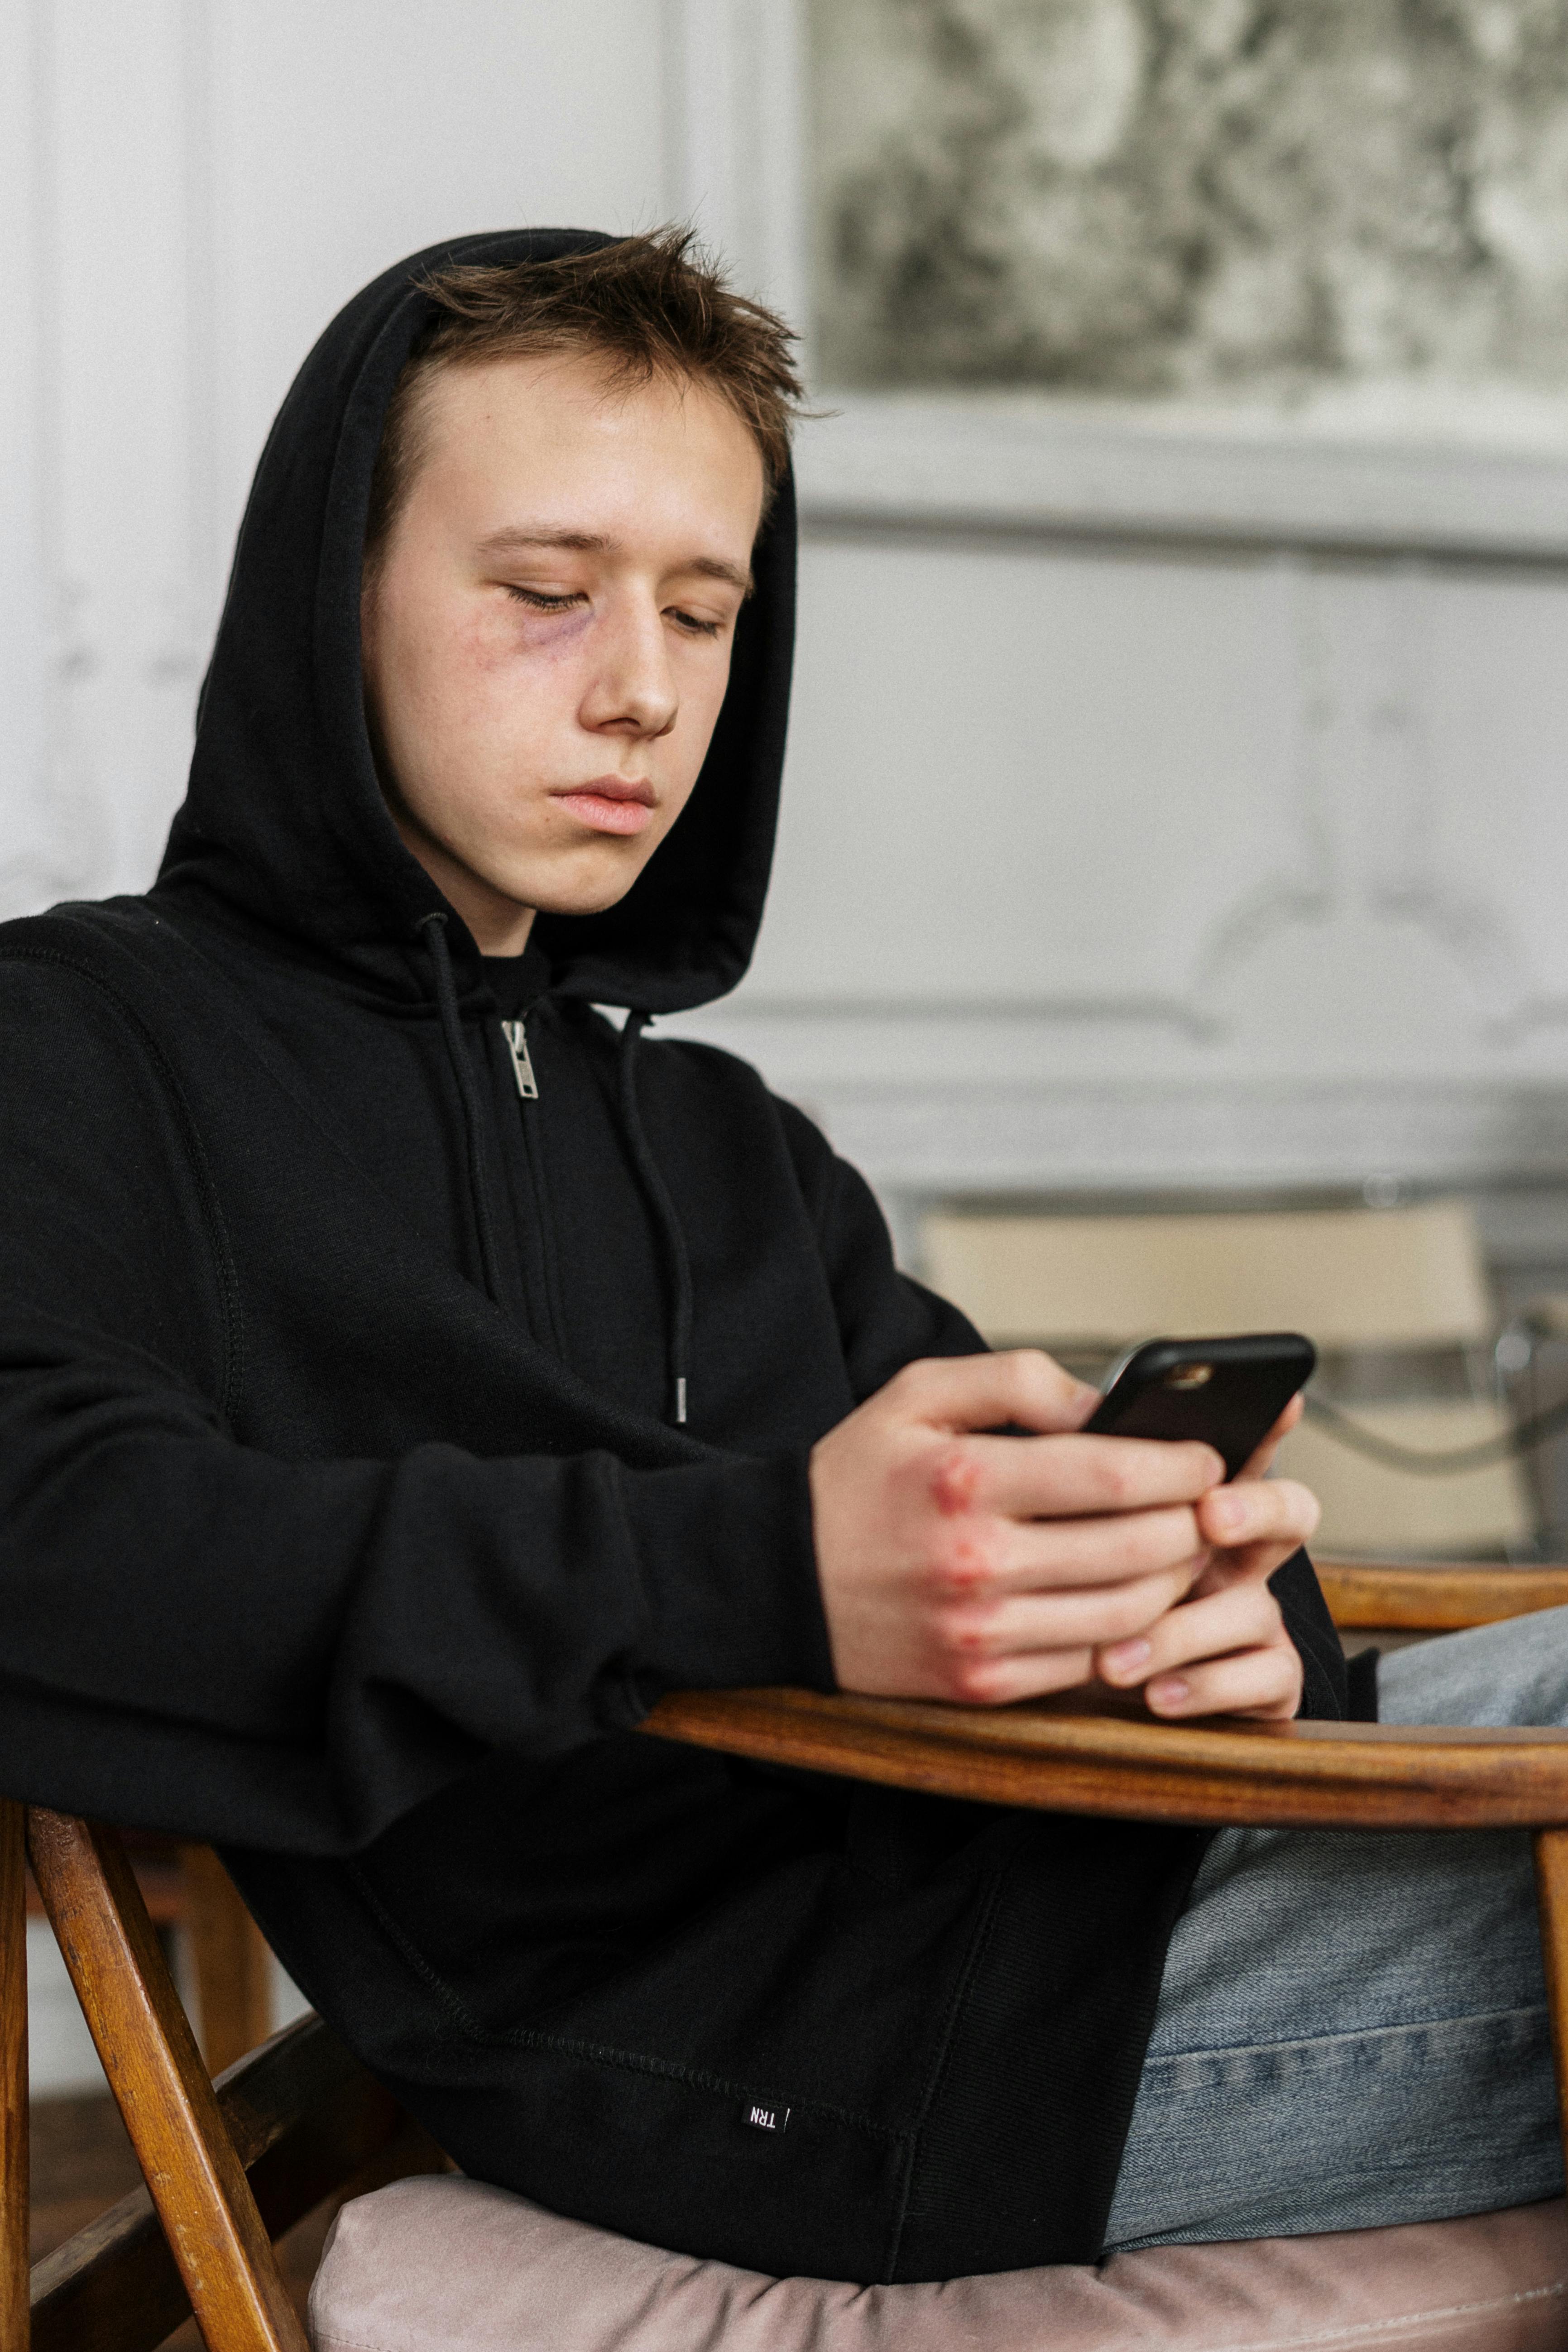 Un adolescent tenant un téléphone | Source : Pexels